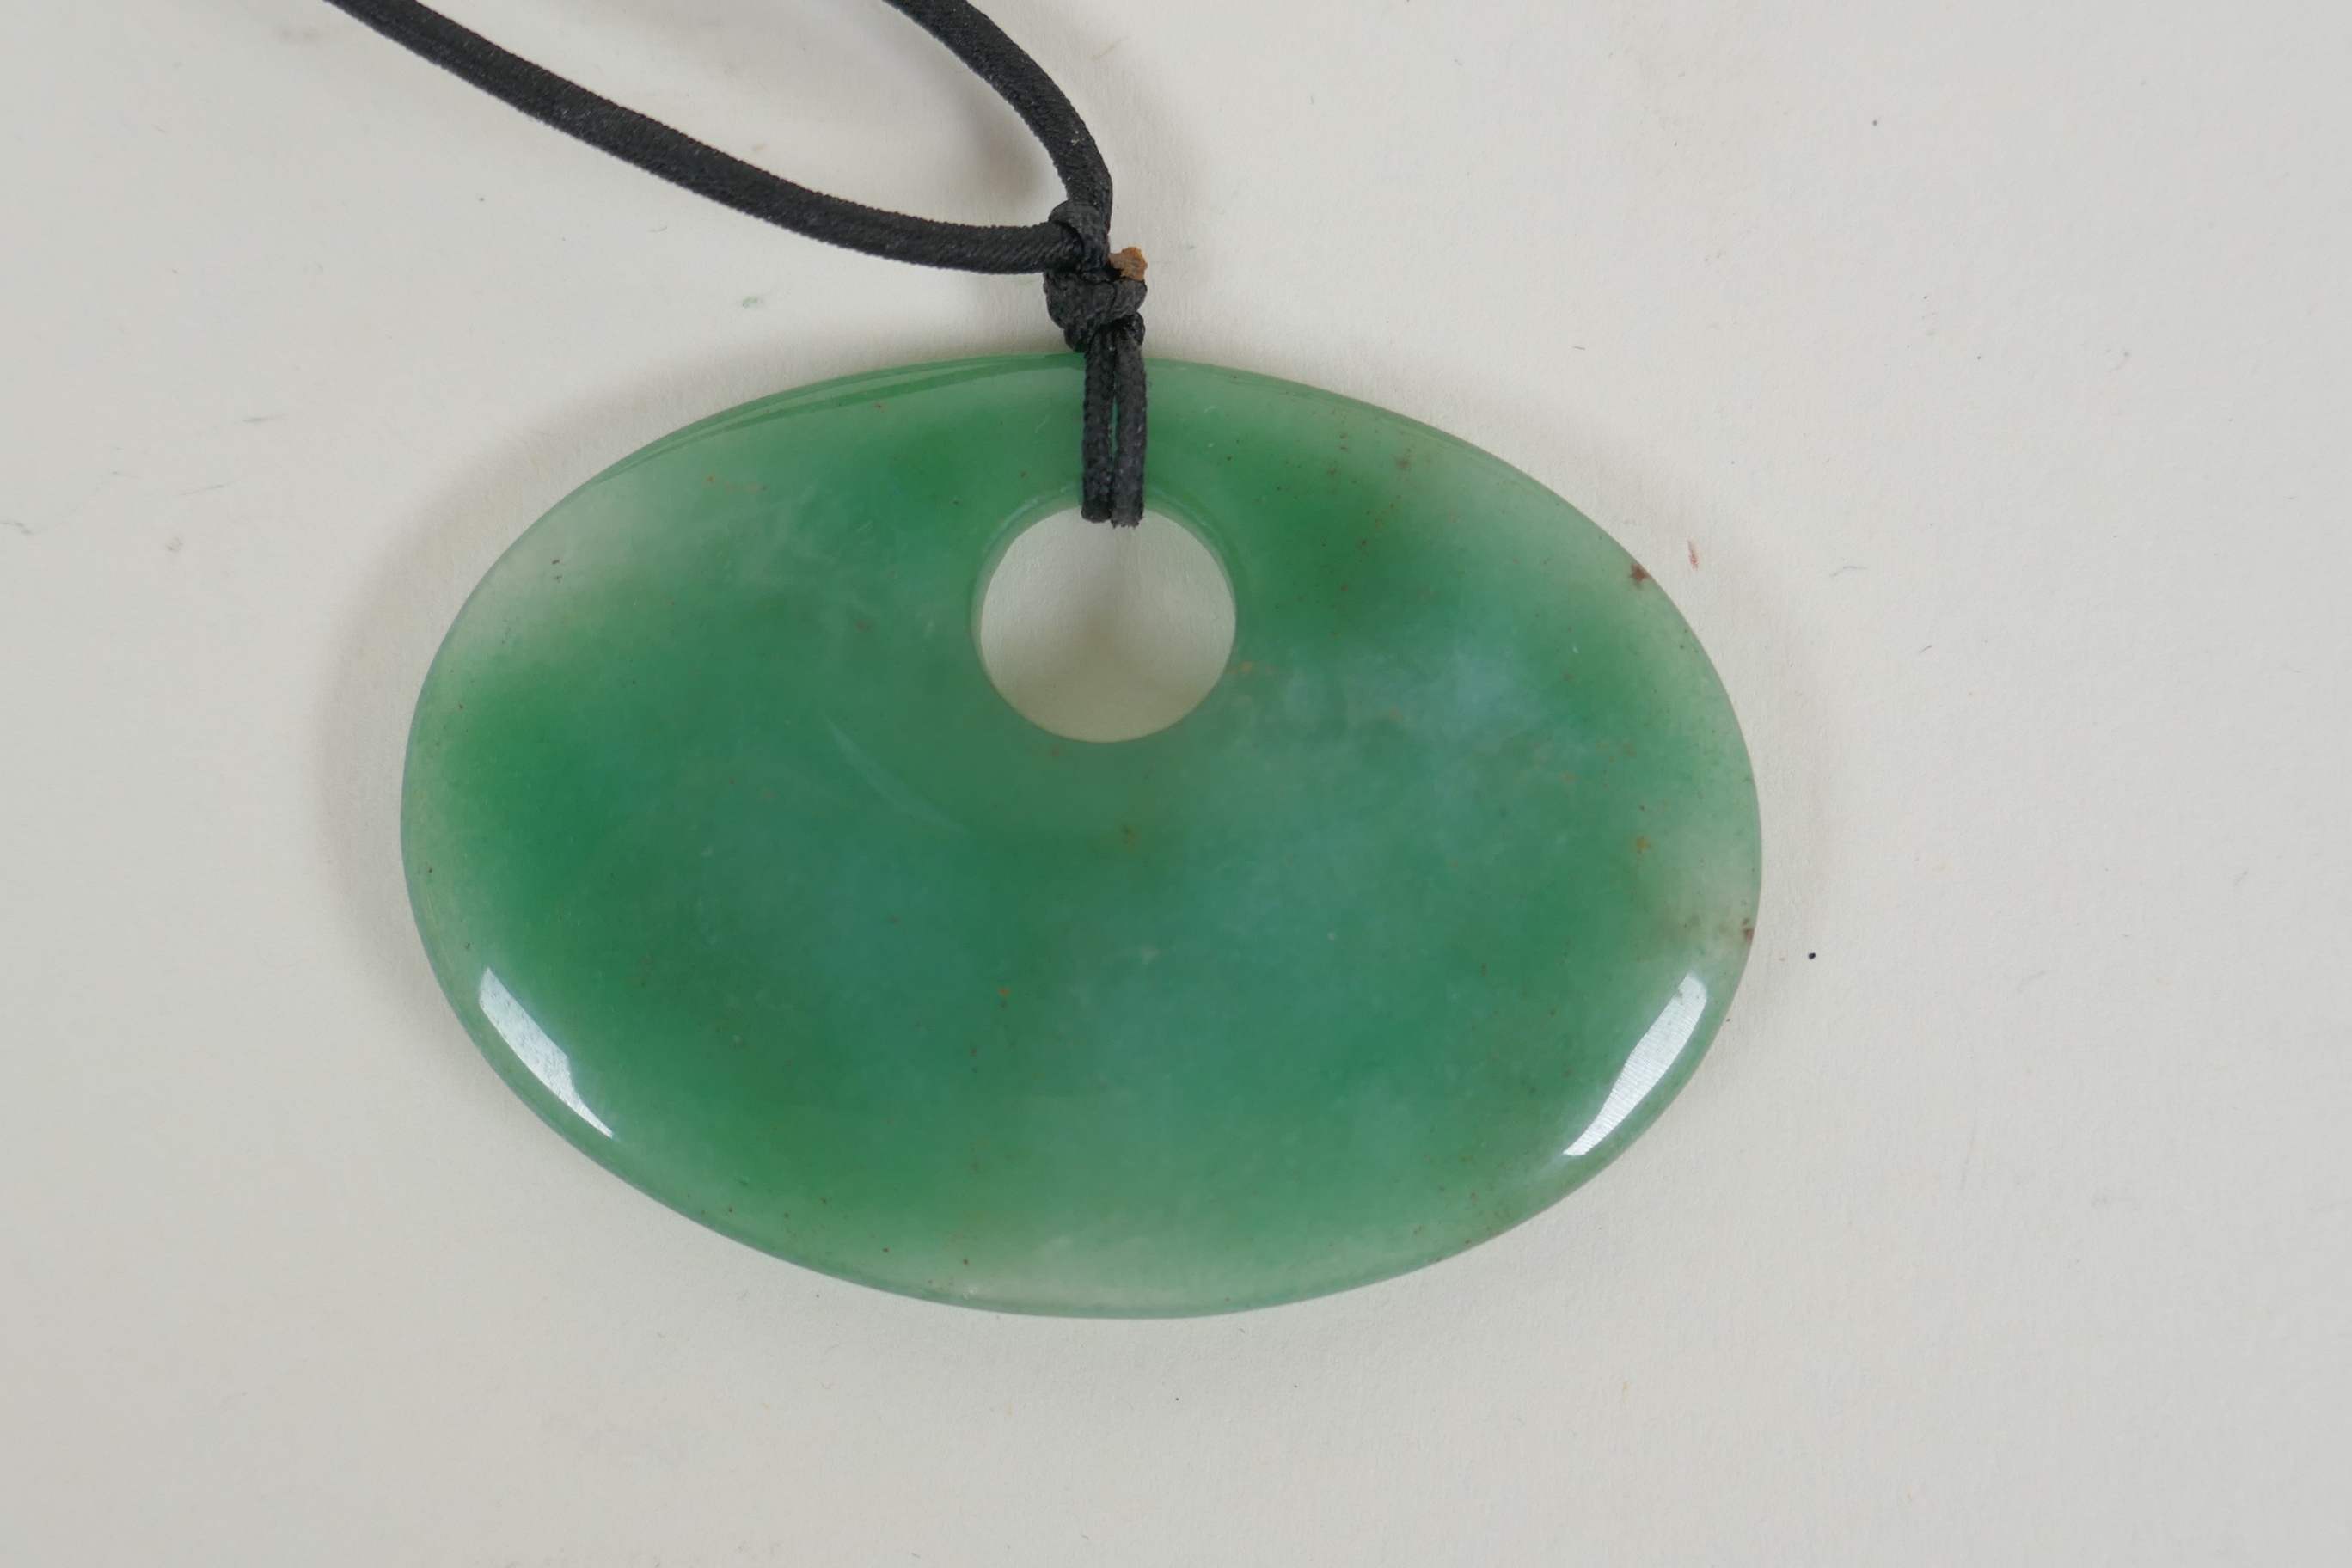 A Nephrite jade pendant necklace, 7 x 5cm - Image 2 of 2